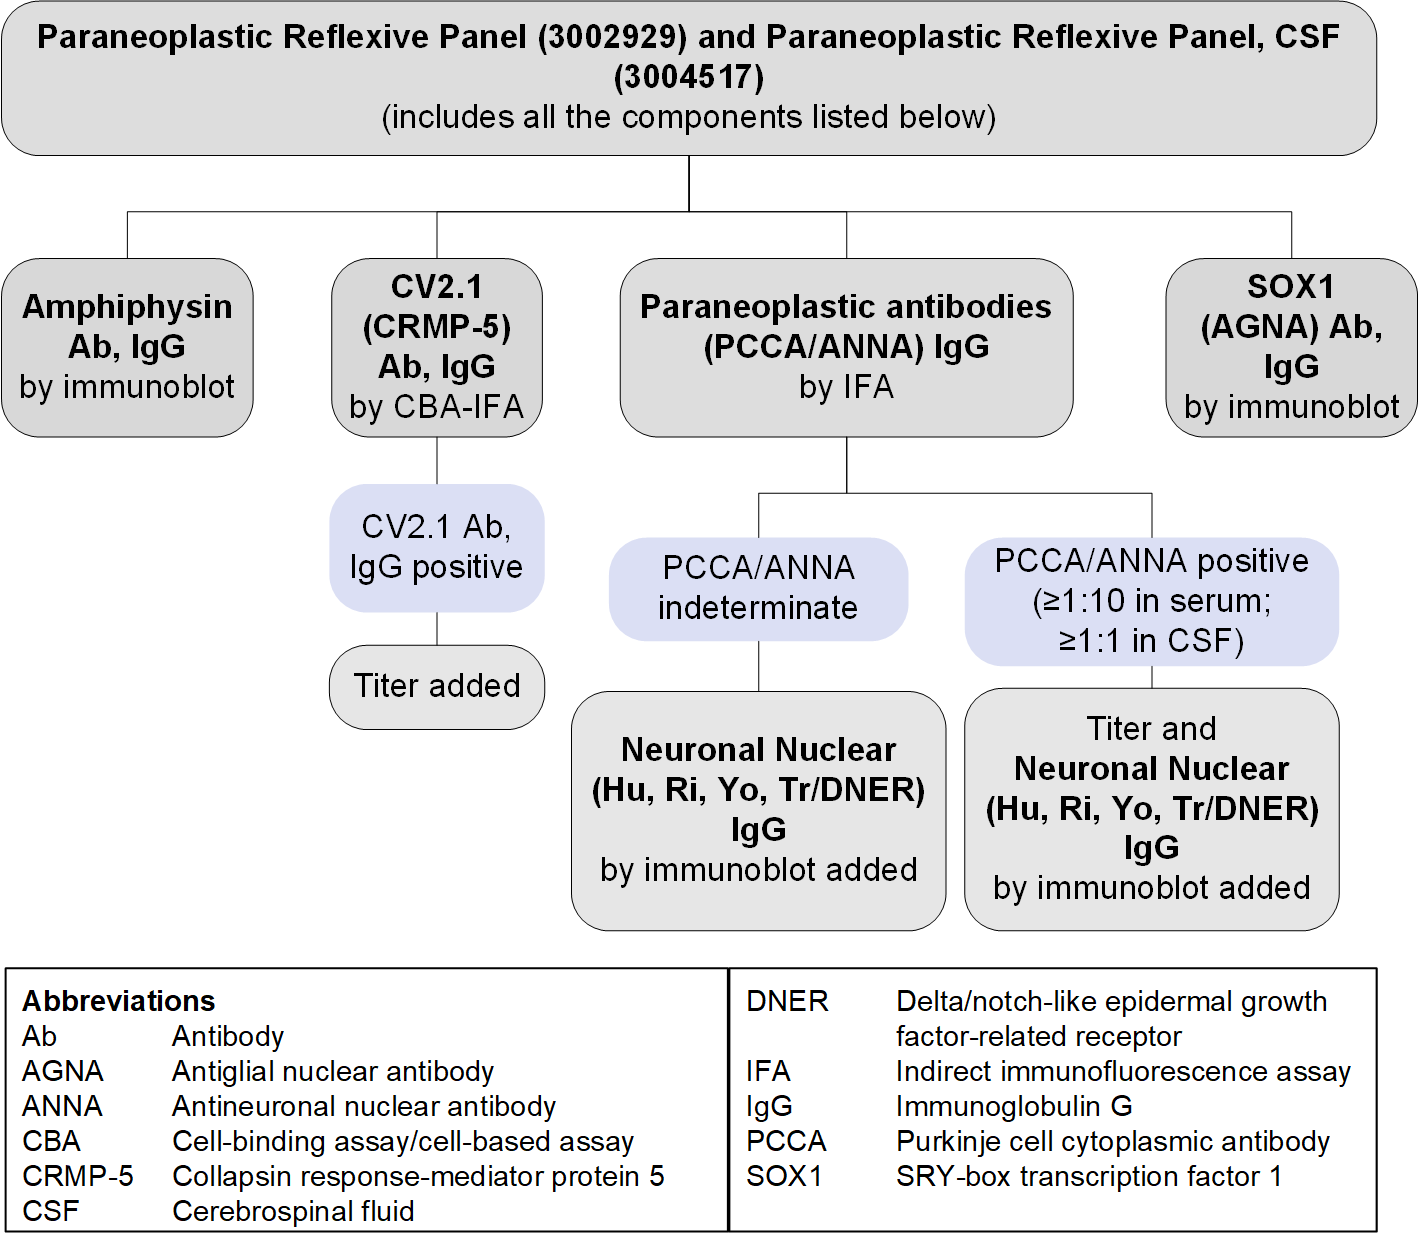 Reflex patterns for Paraneoplastic Panels